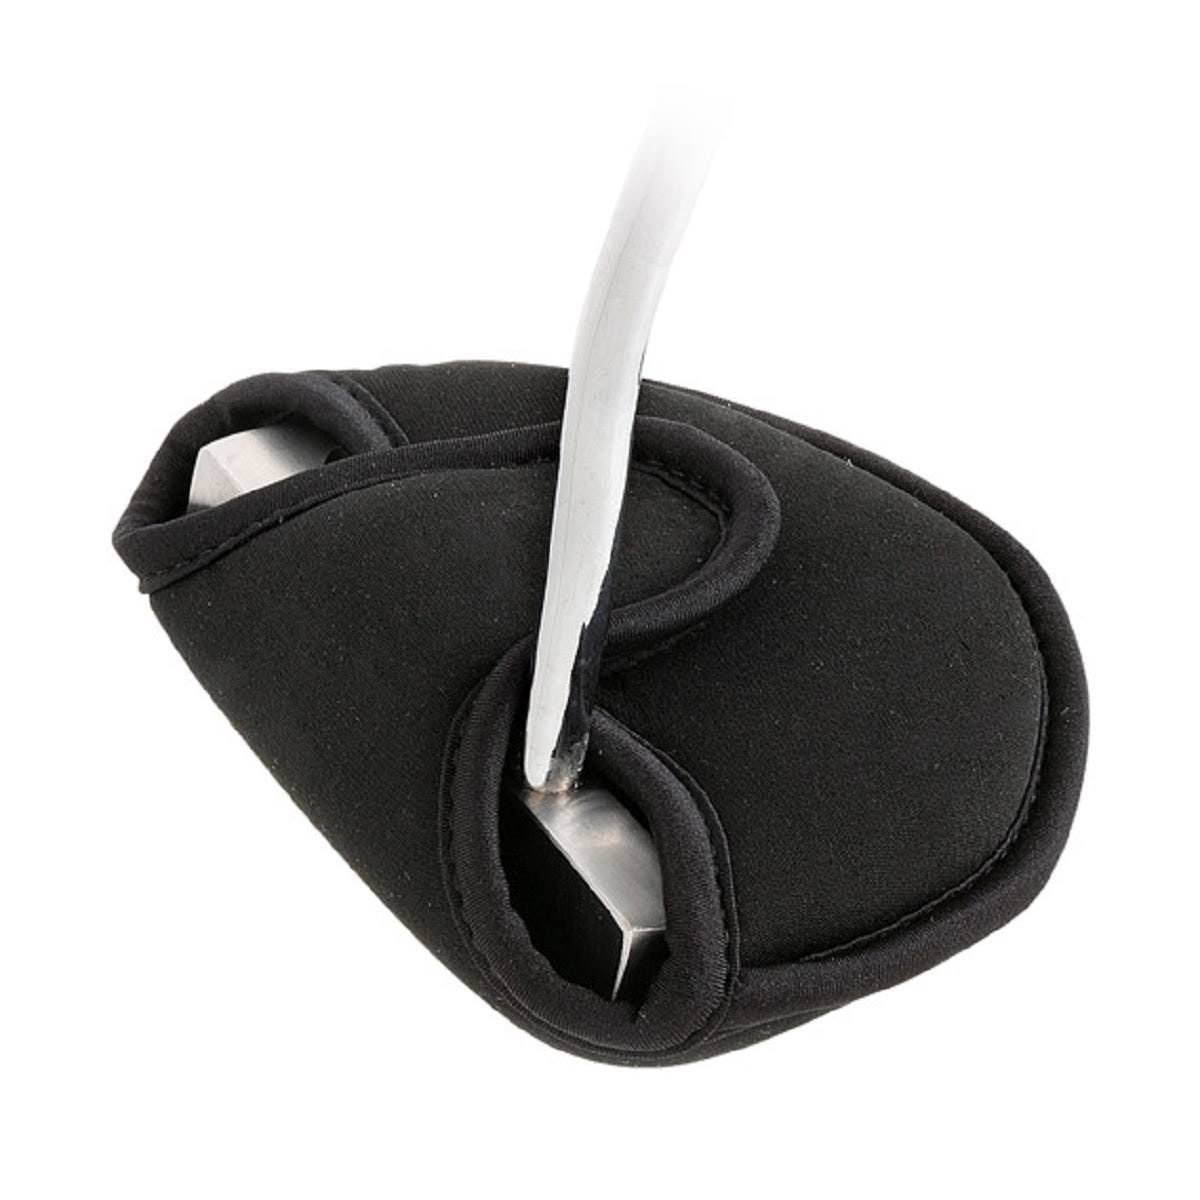 Stylish Black Oversize Mallet Putter Headcover | Image